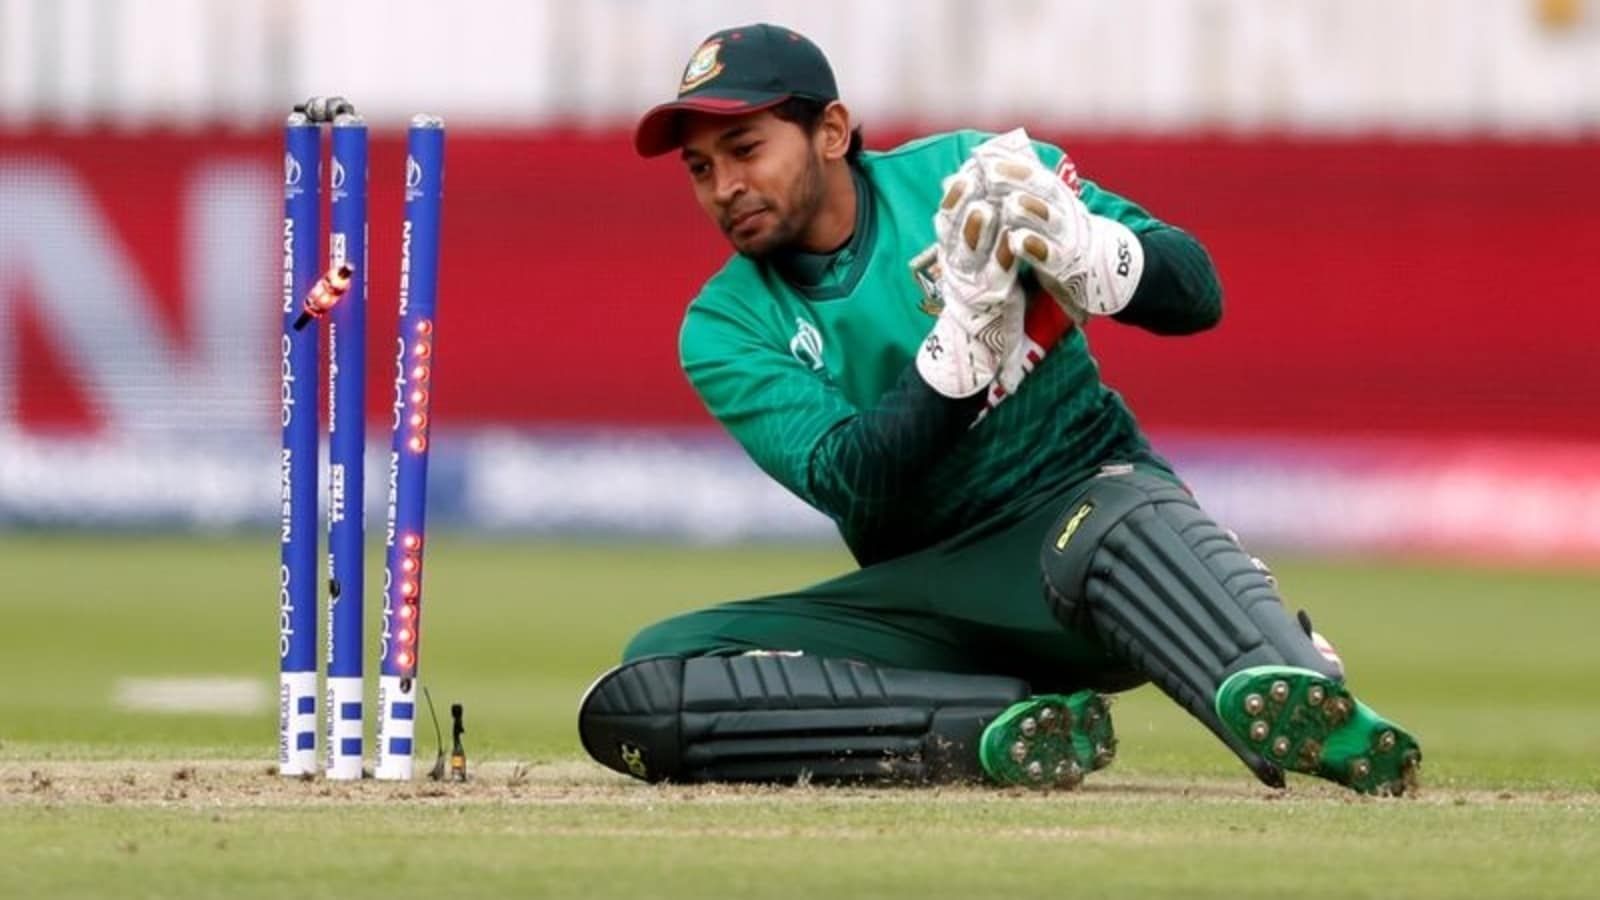 Mushfiqur Rahim (Bangladesh) - 0.10 seconds, Fastest Wicketkeeper In The World - Top 8